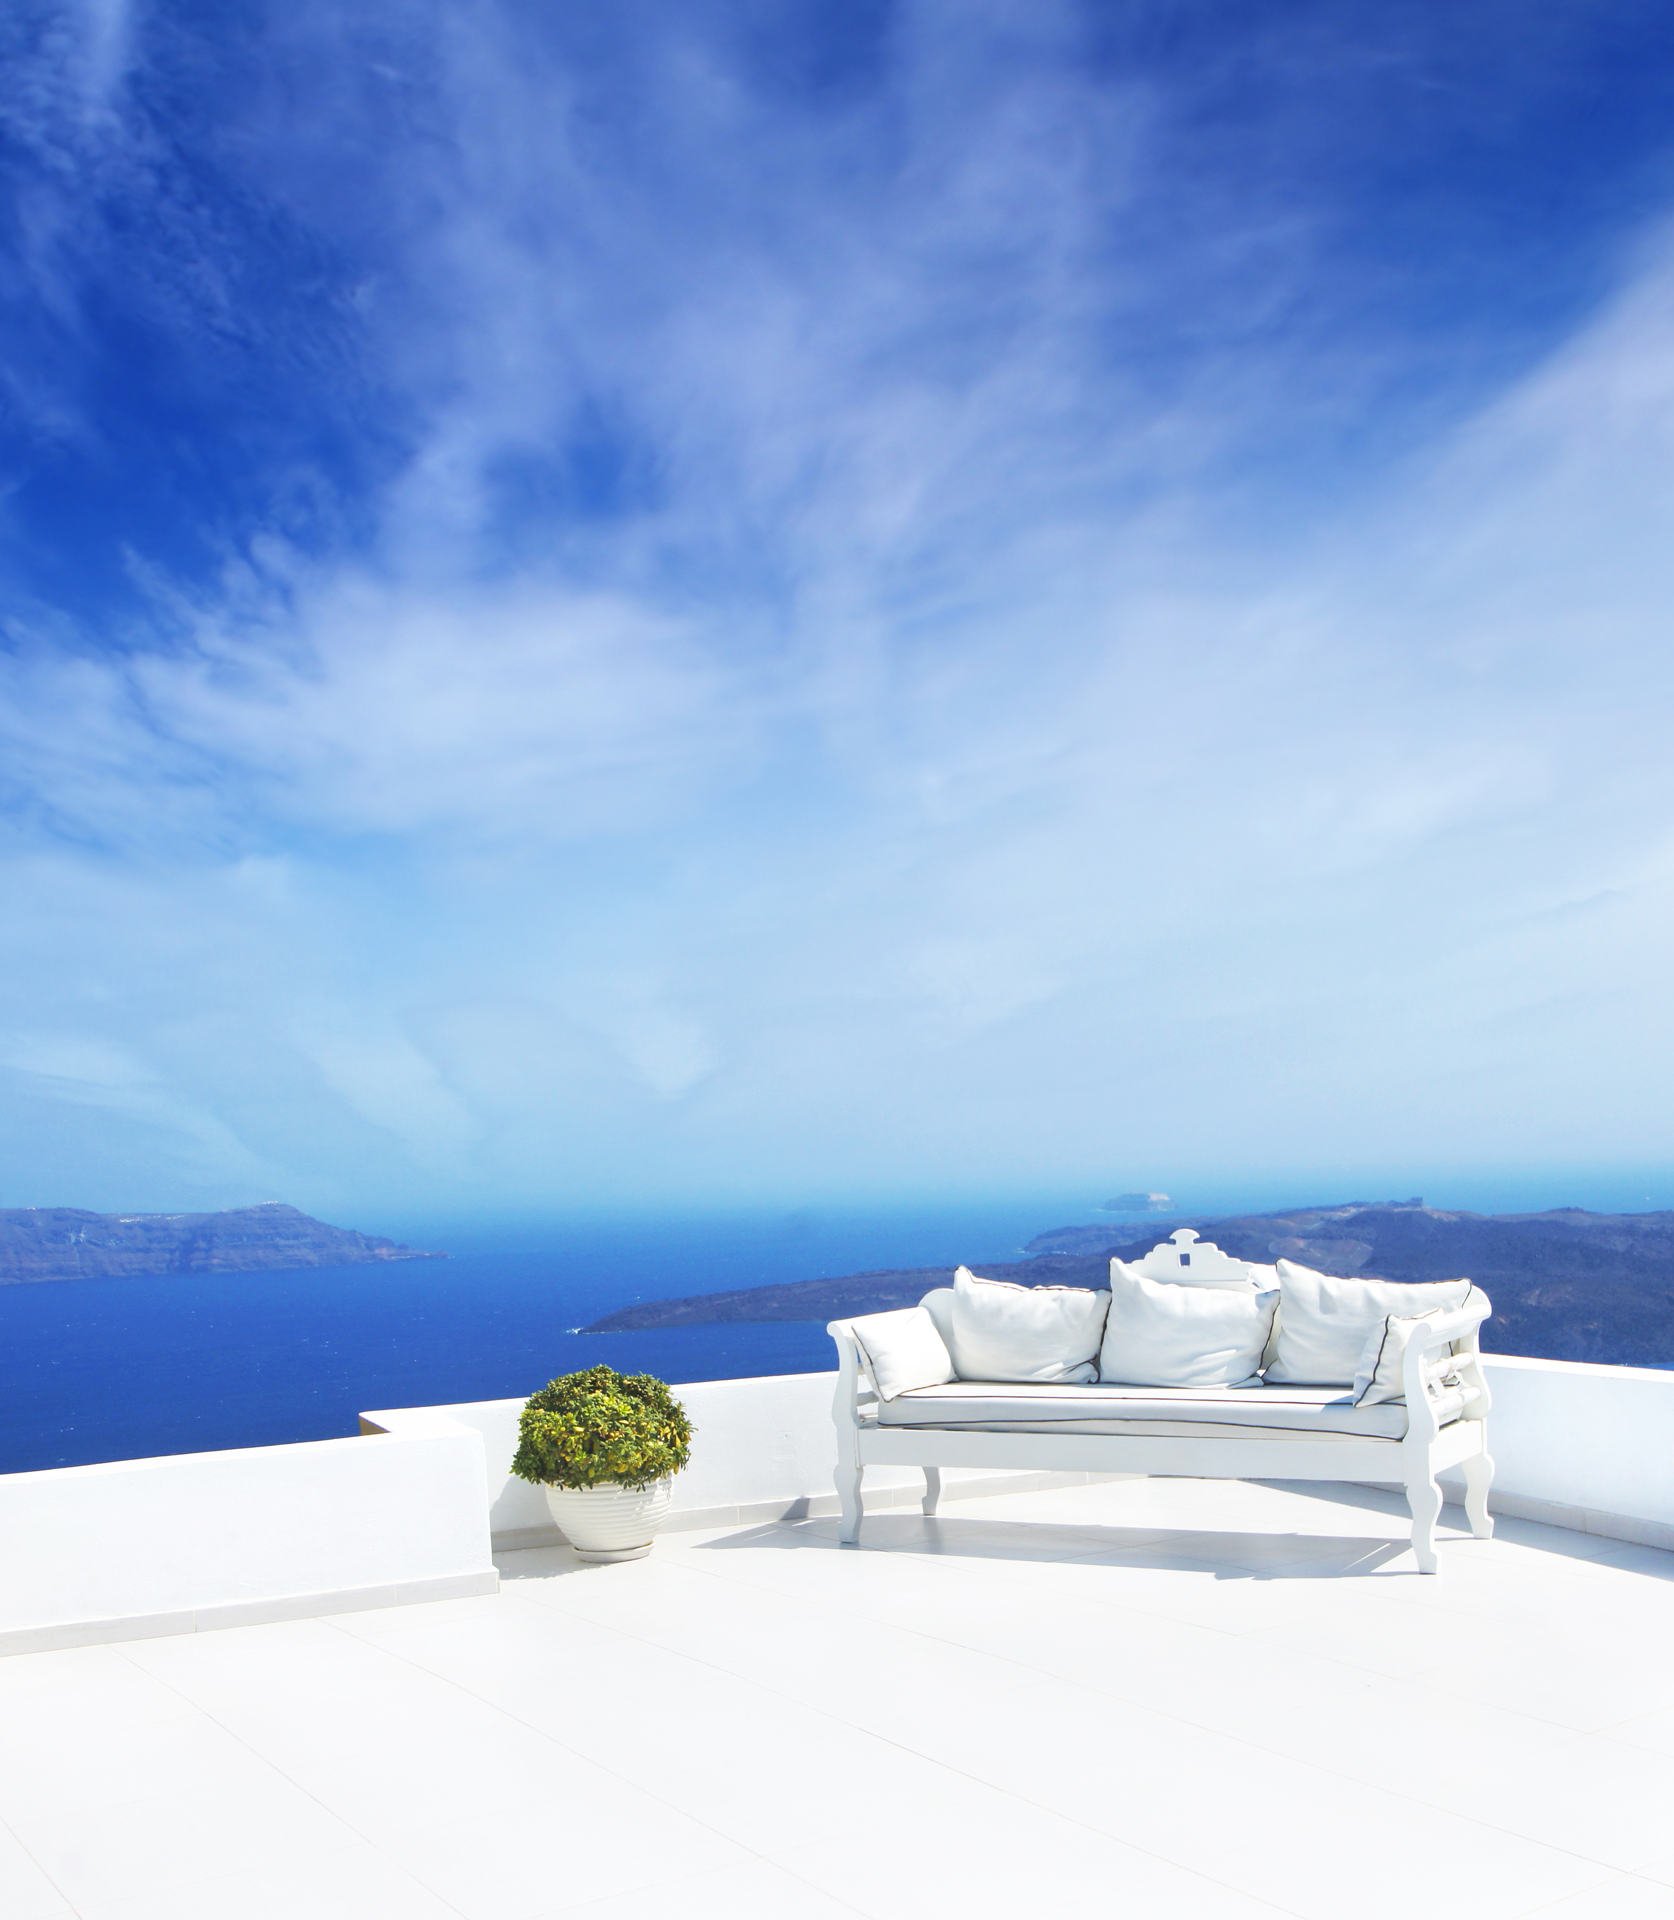 Luxury sofa and the beautiful sky